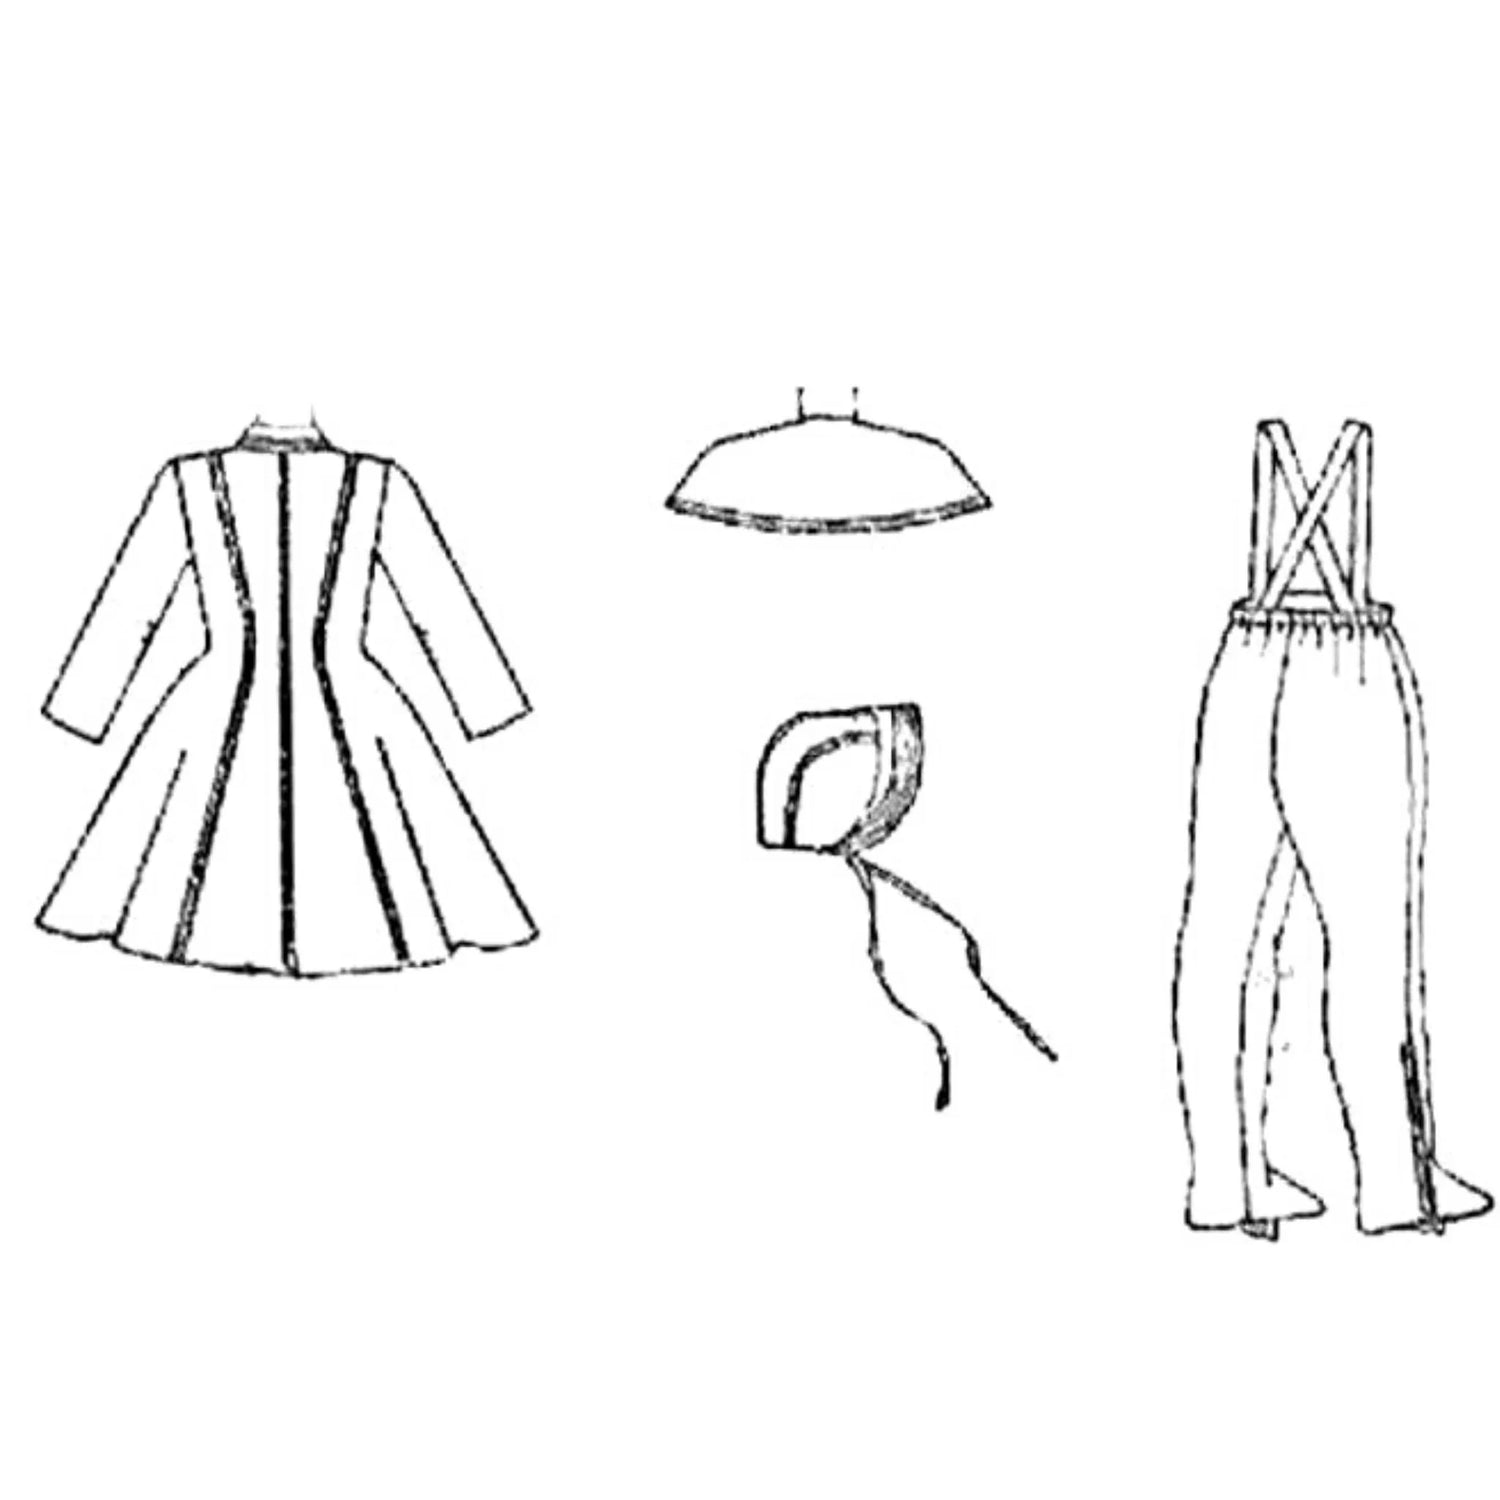 Line drawings of coats